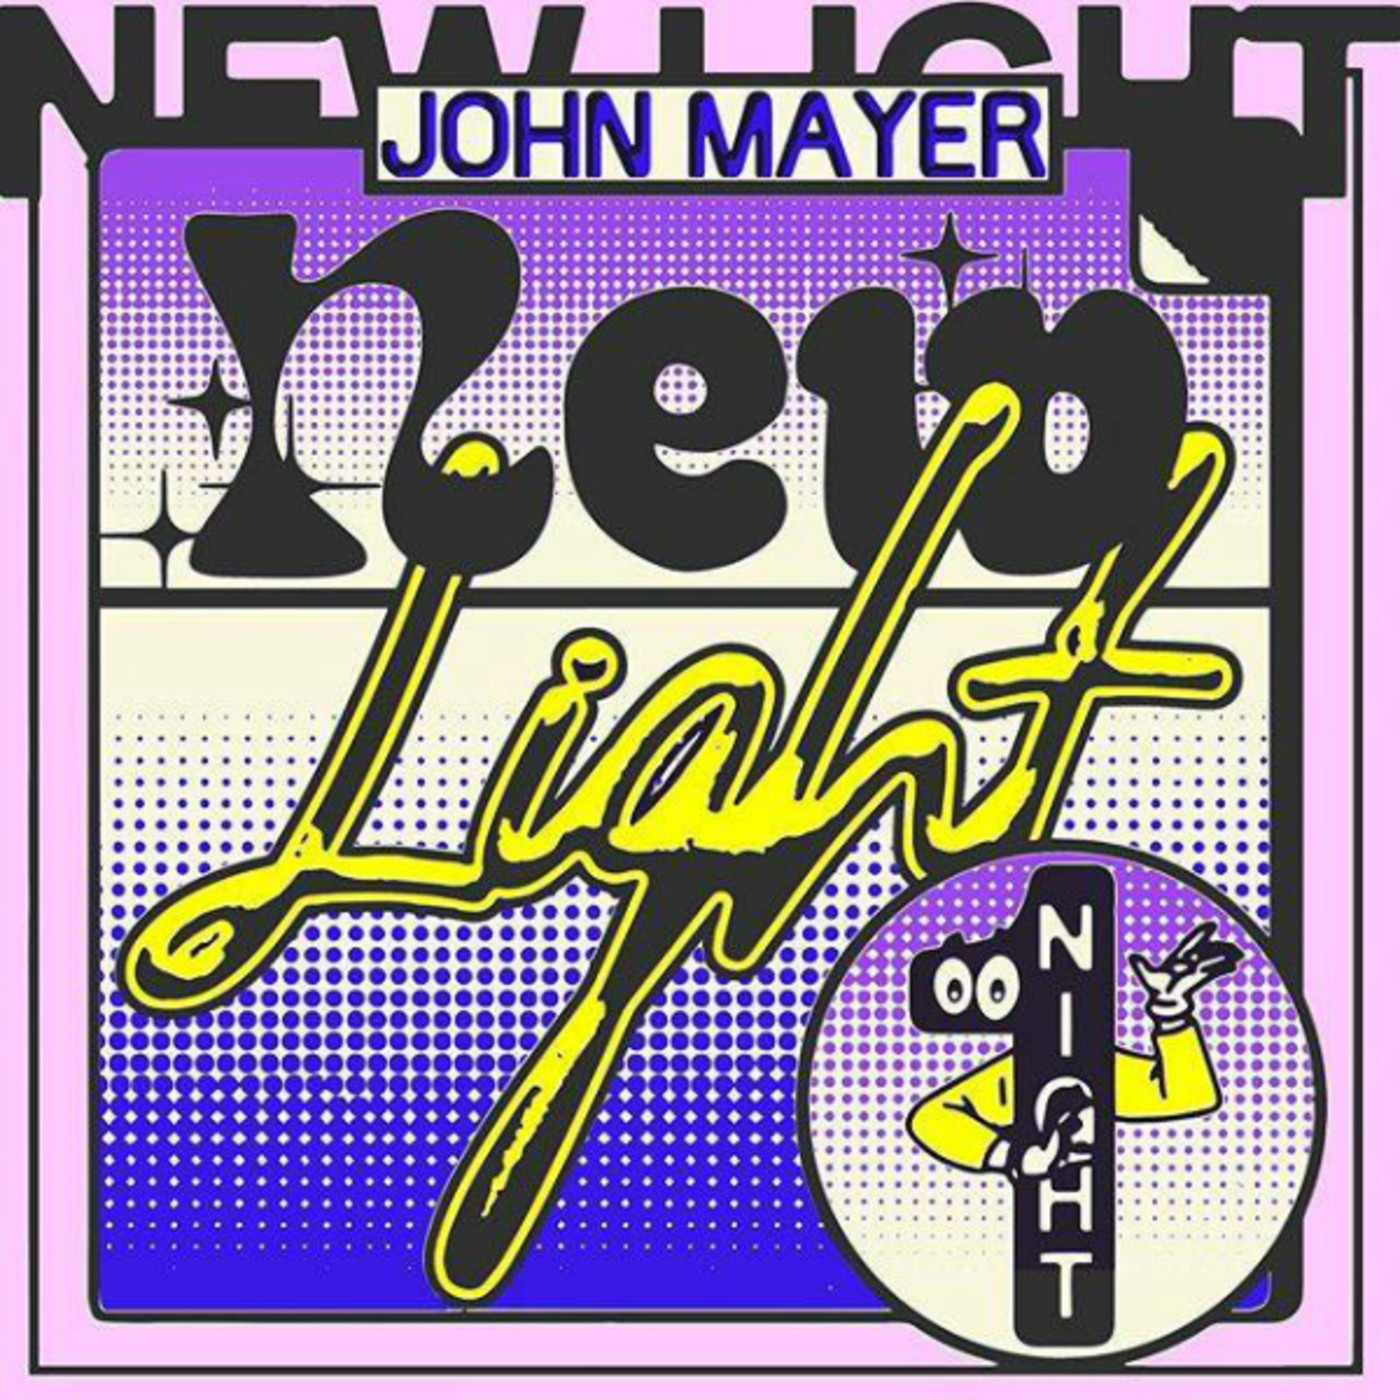 John Mayer Drops New Song New Light Co Produced By No I D Complex